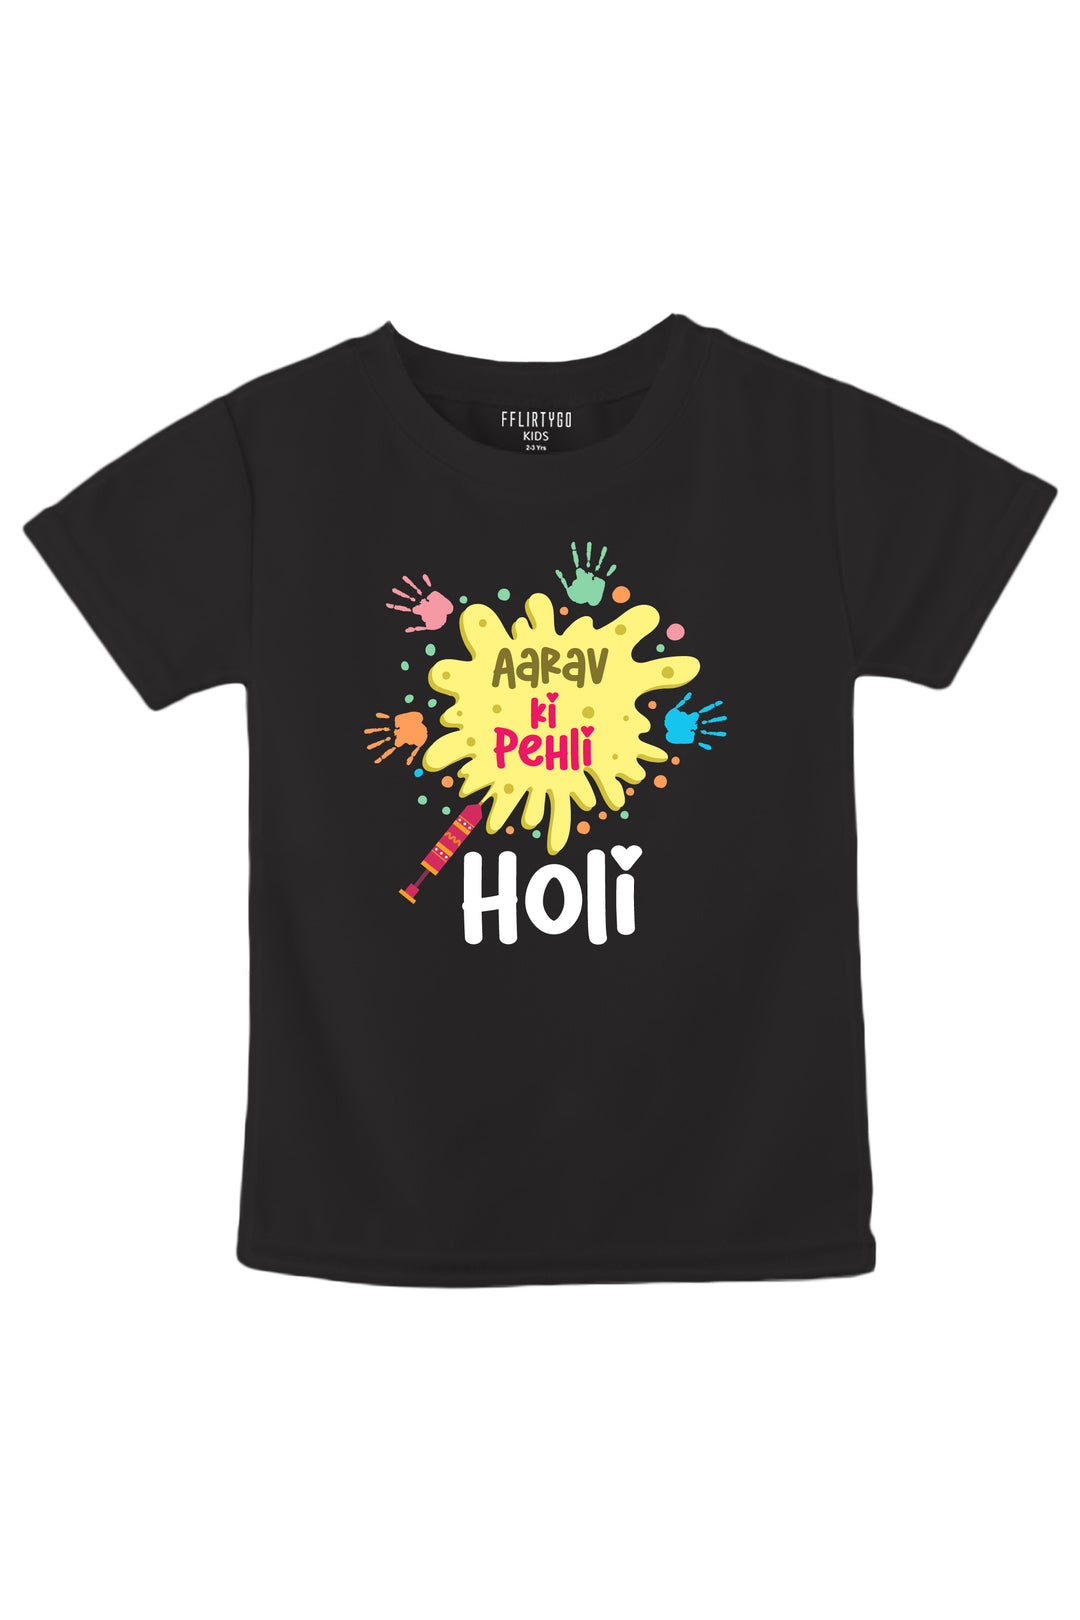 Add On Kids T-Shirt for Meri Pehli Holi w/ Custom Names